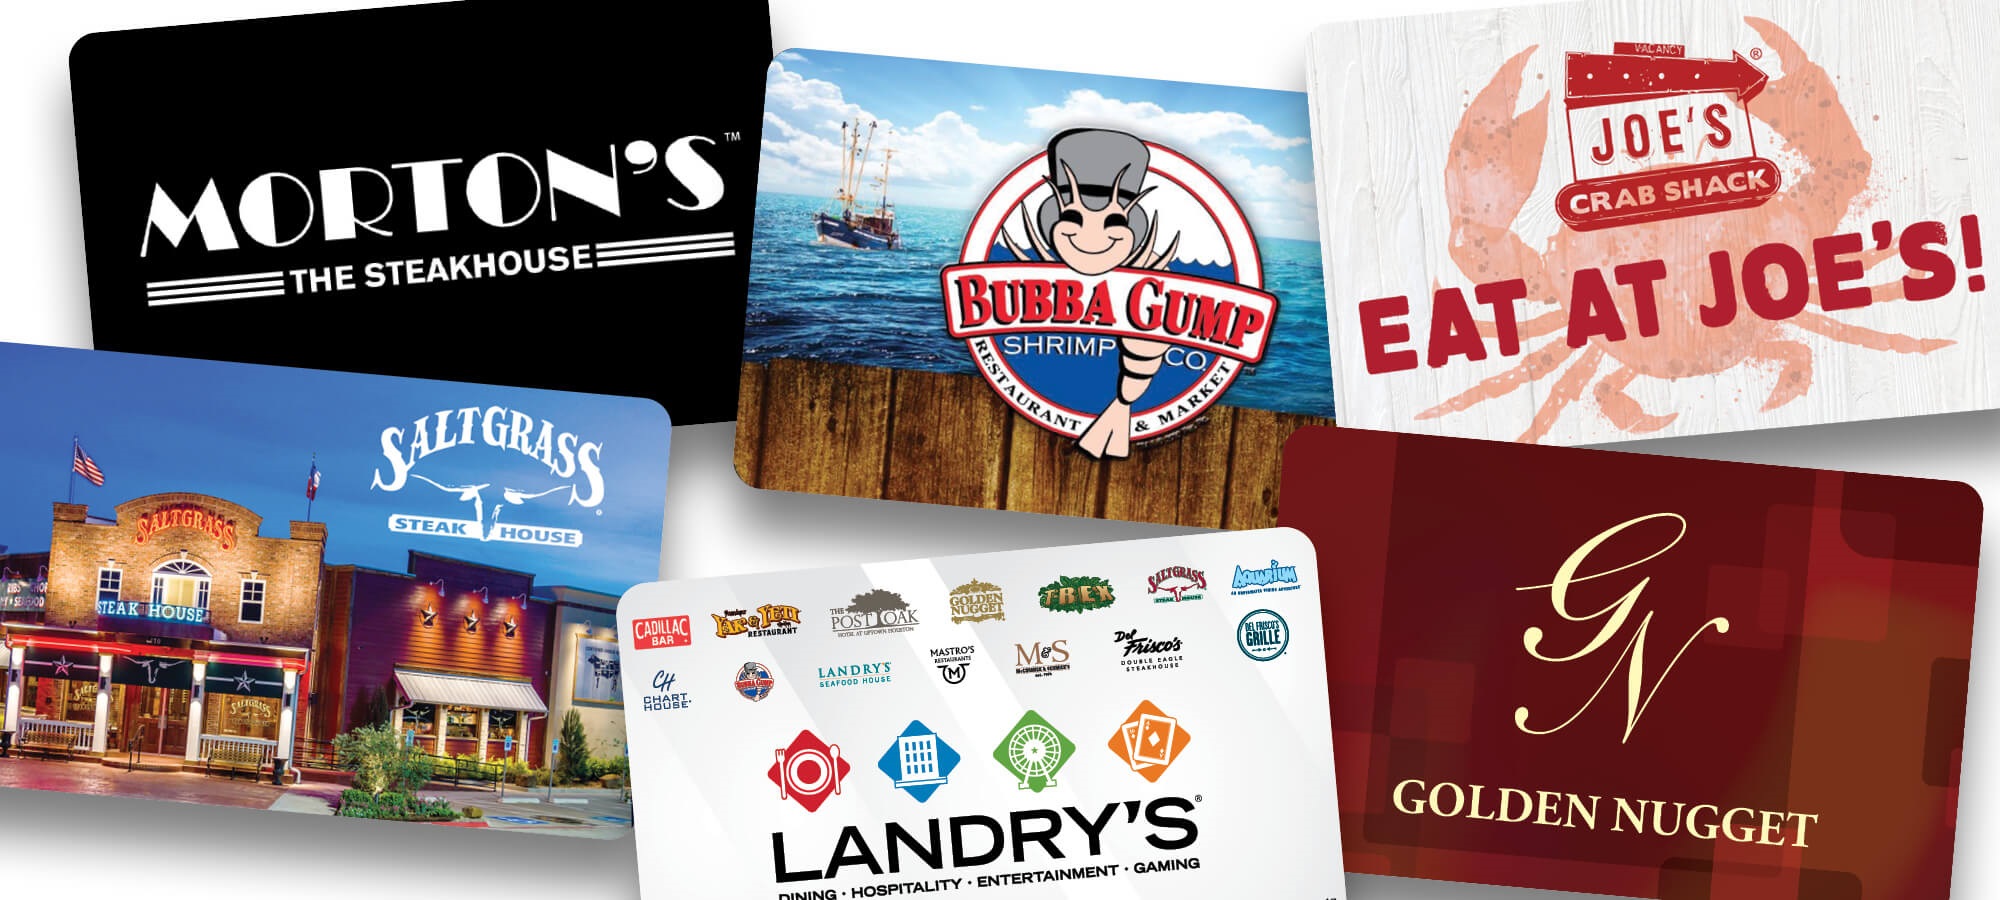 Landry's Gift Card Restaurants : Landry S Dining Brands ...